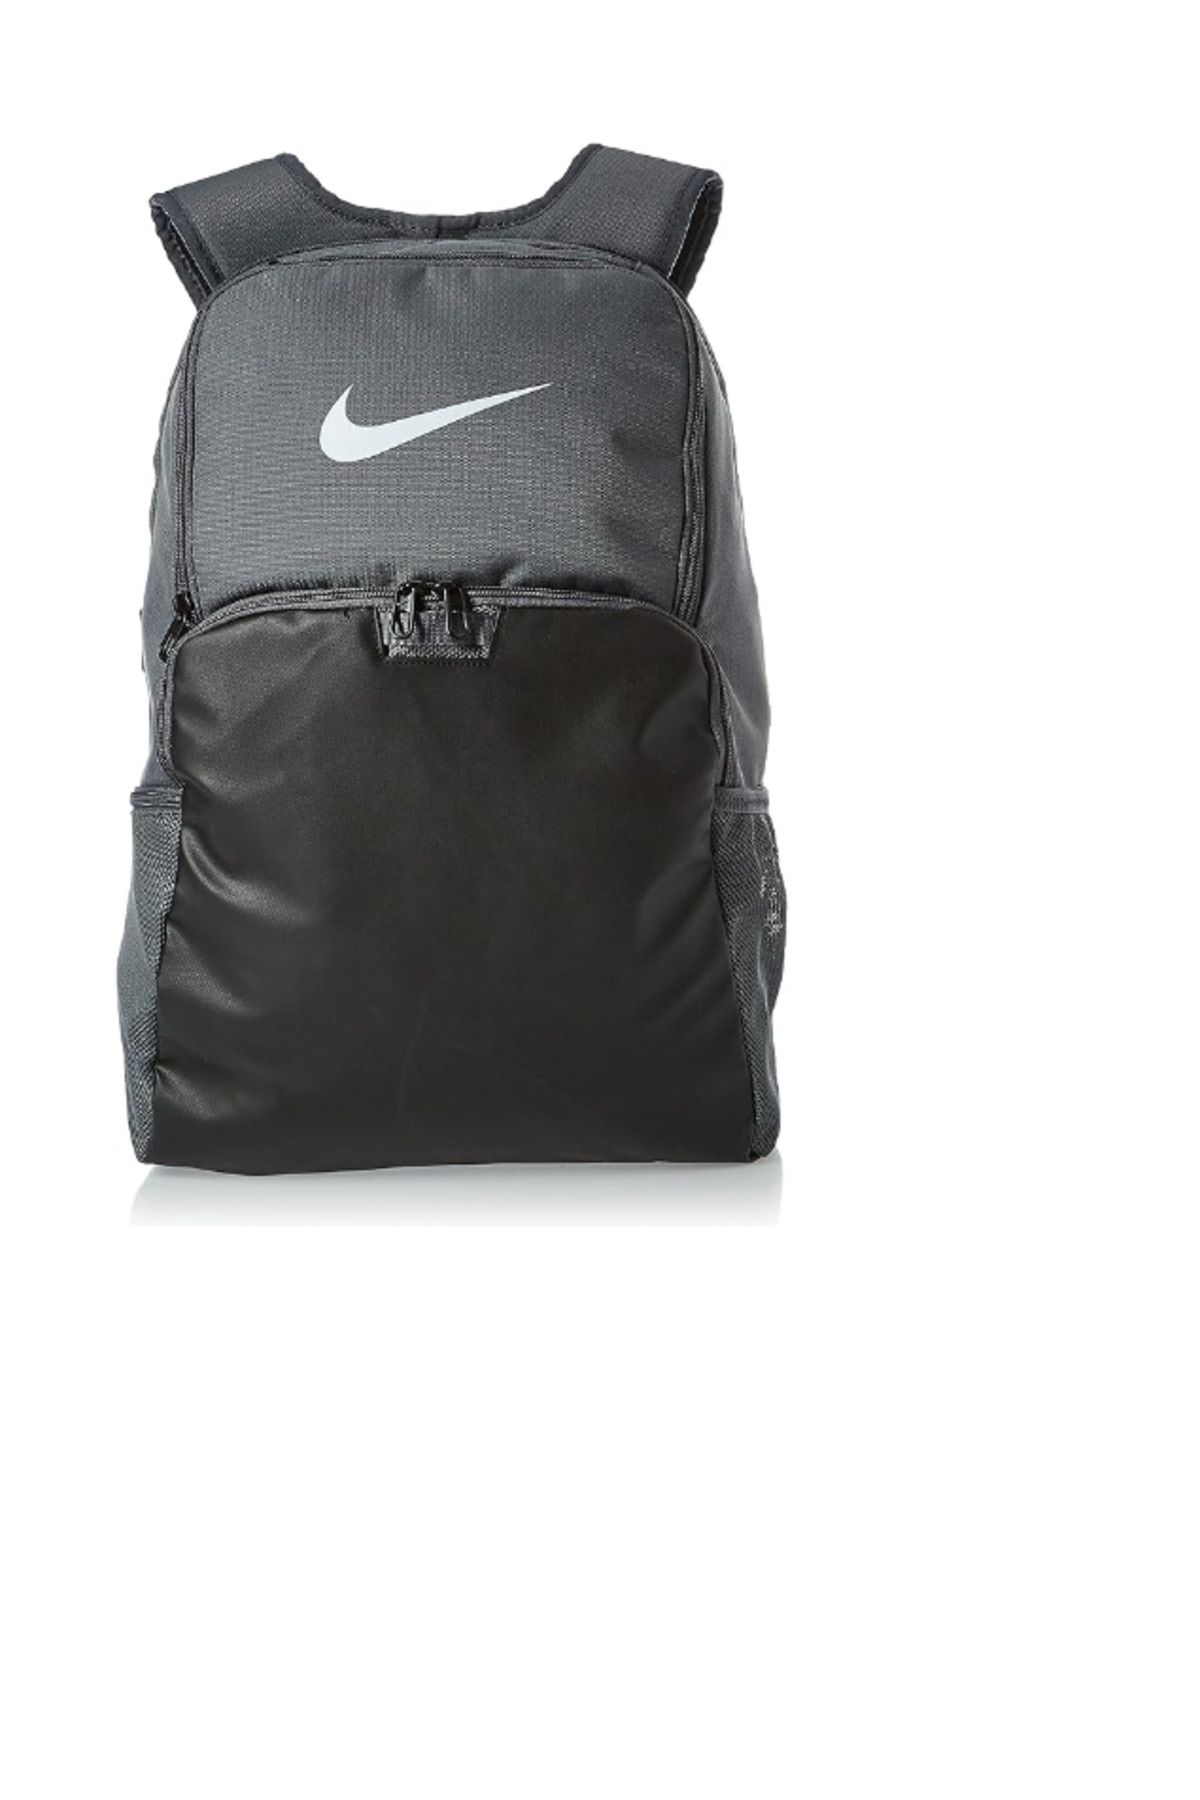 Nike Backpack Brasília Impresso XL 30 litros Cor Preto Militar